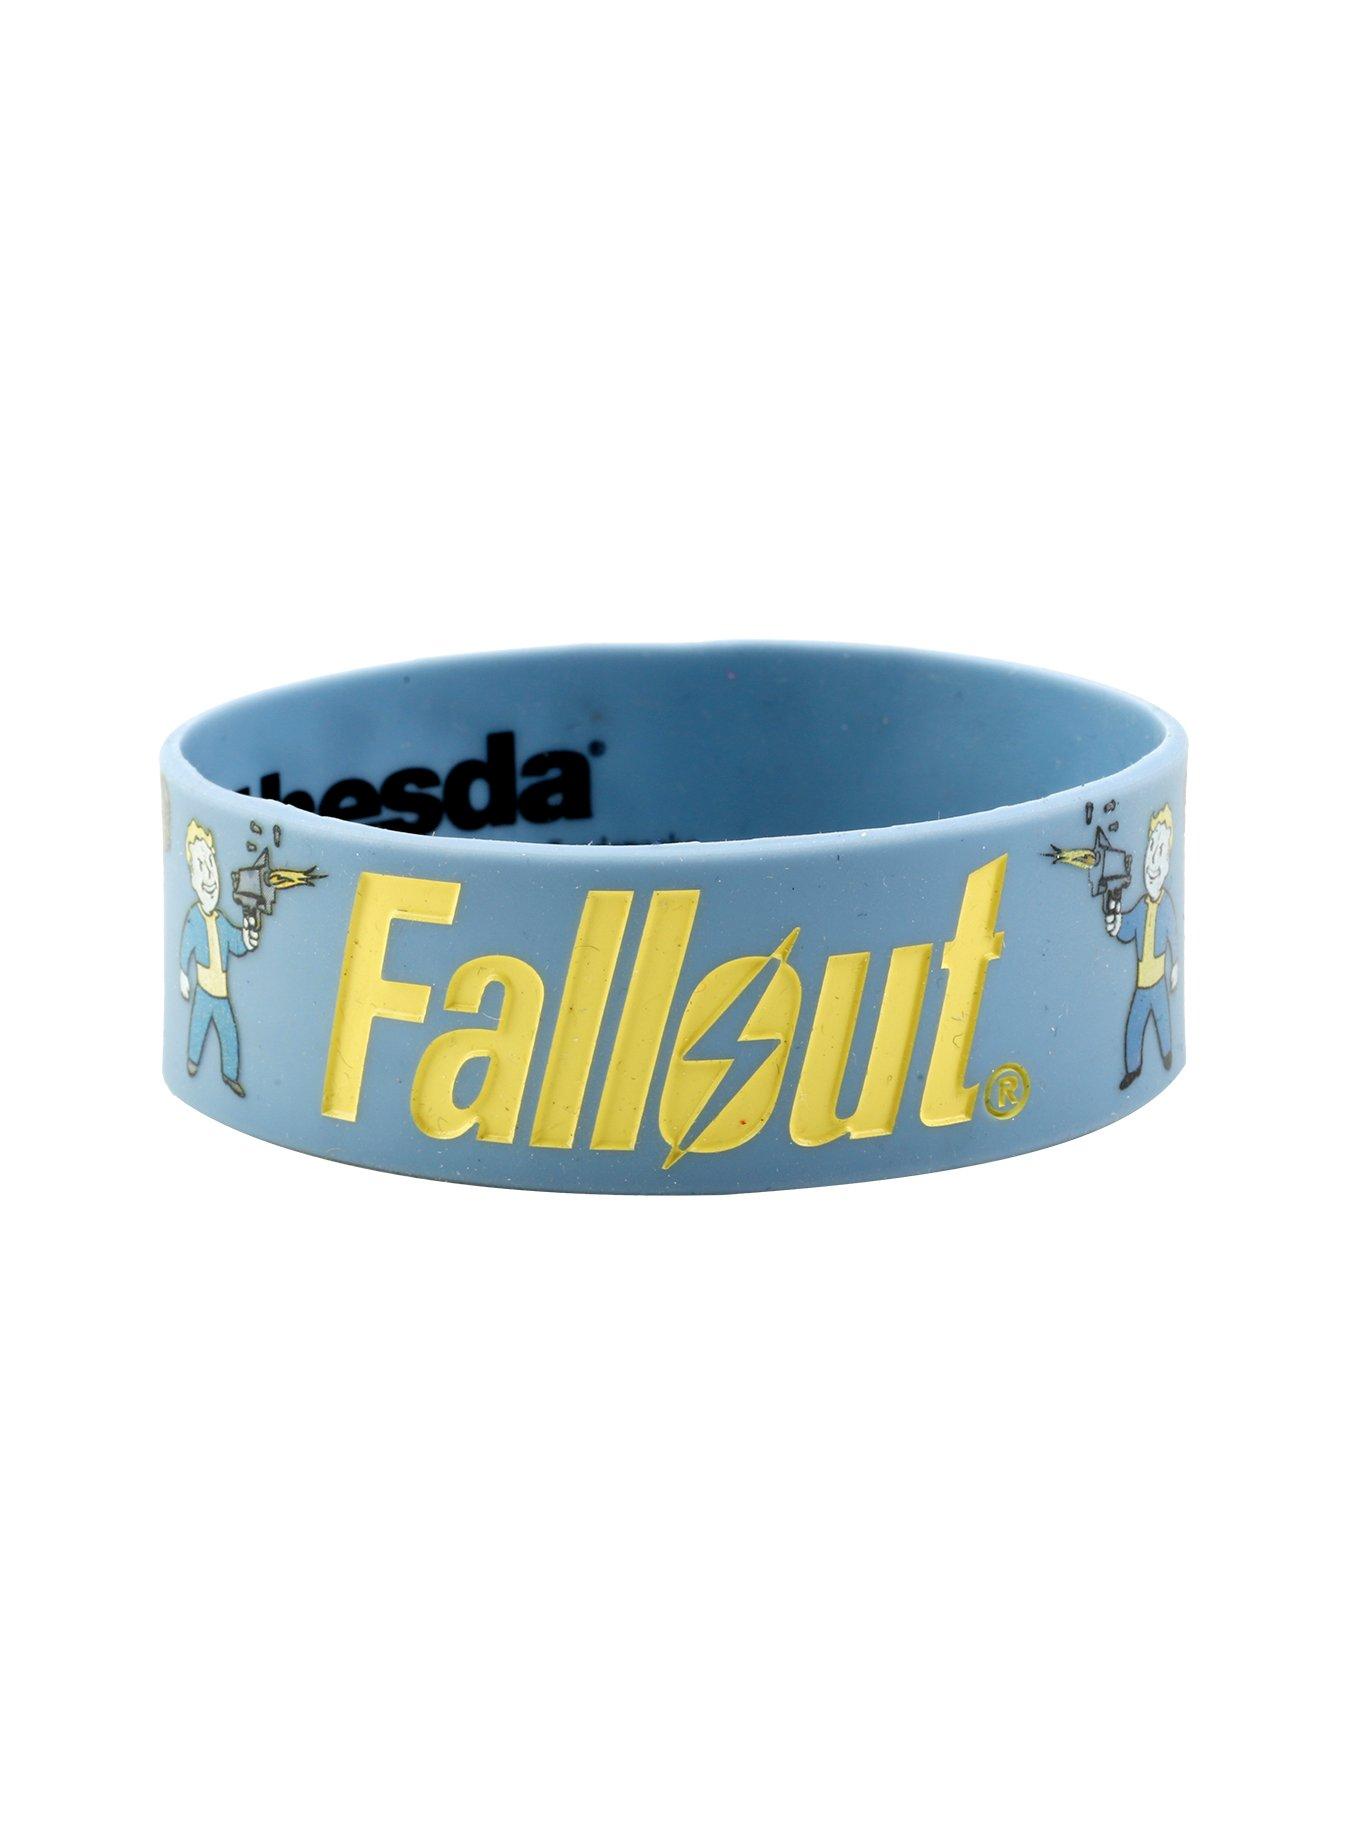 Fallout Vault Boy Guns Logo Rubber Bracelet, , hi-res